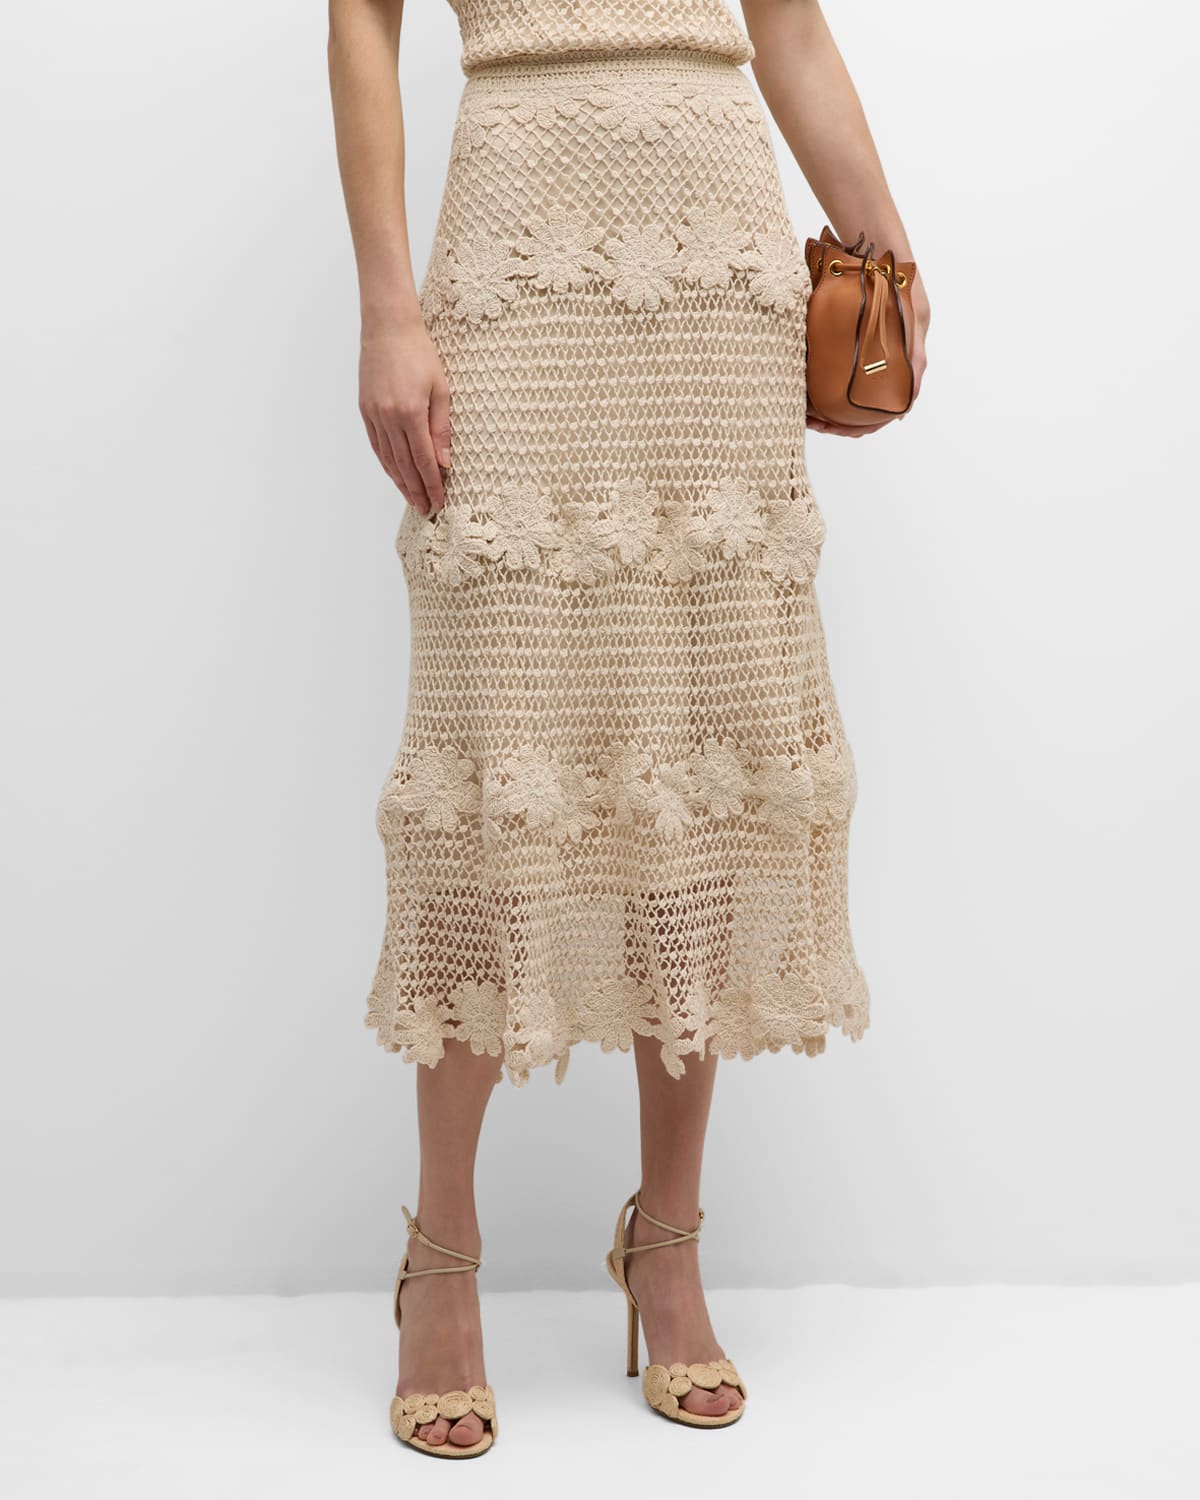 Presley Floral Crochet Midi Skirt